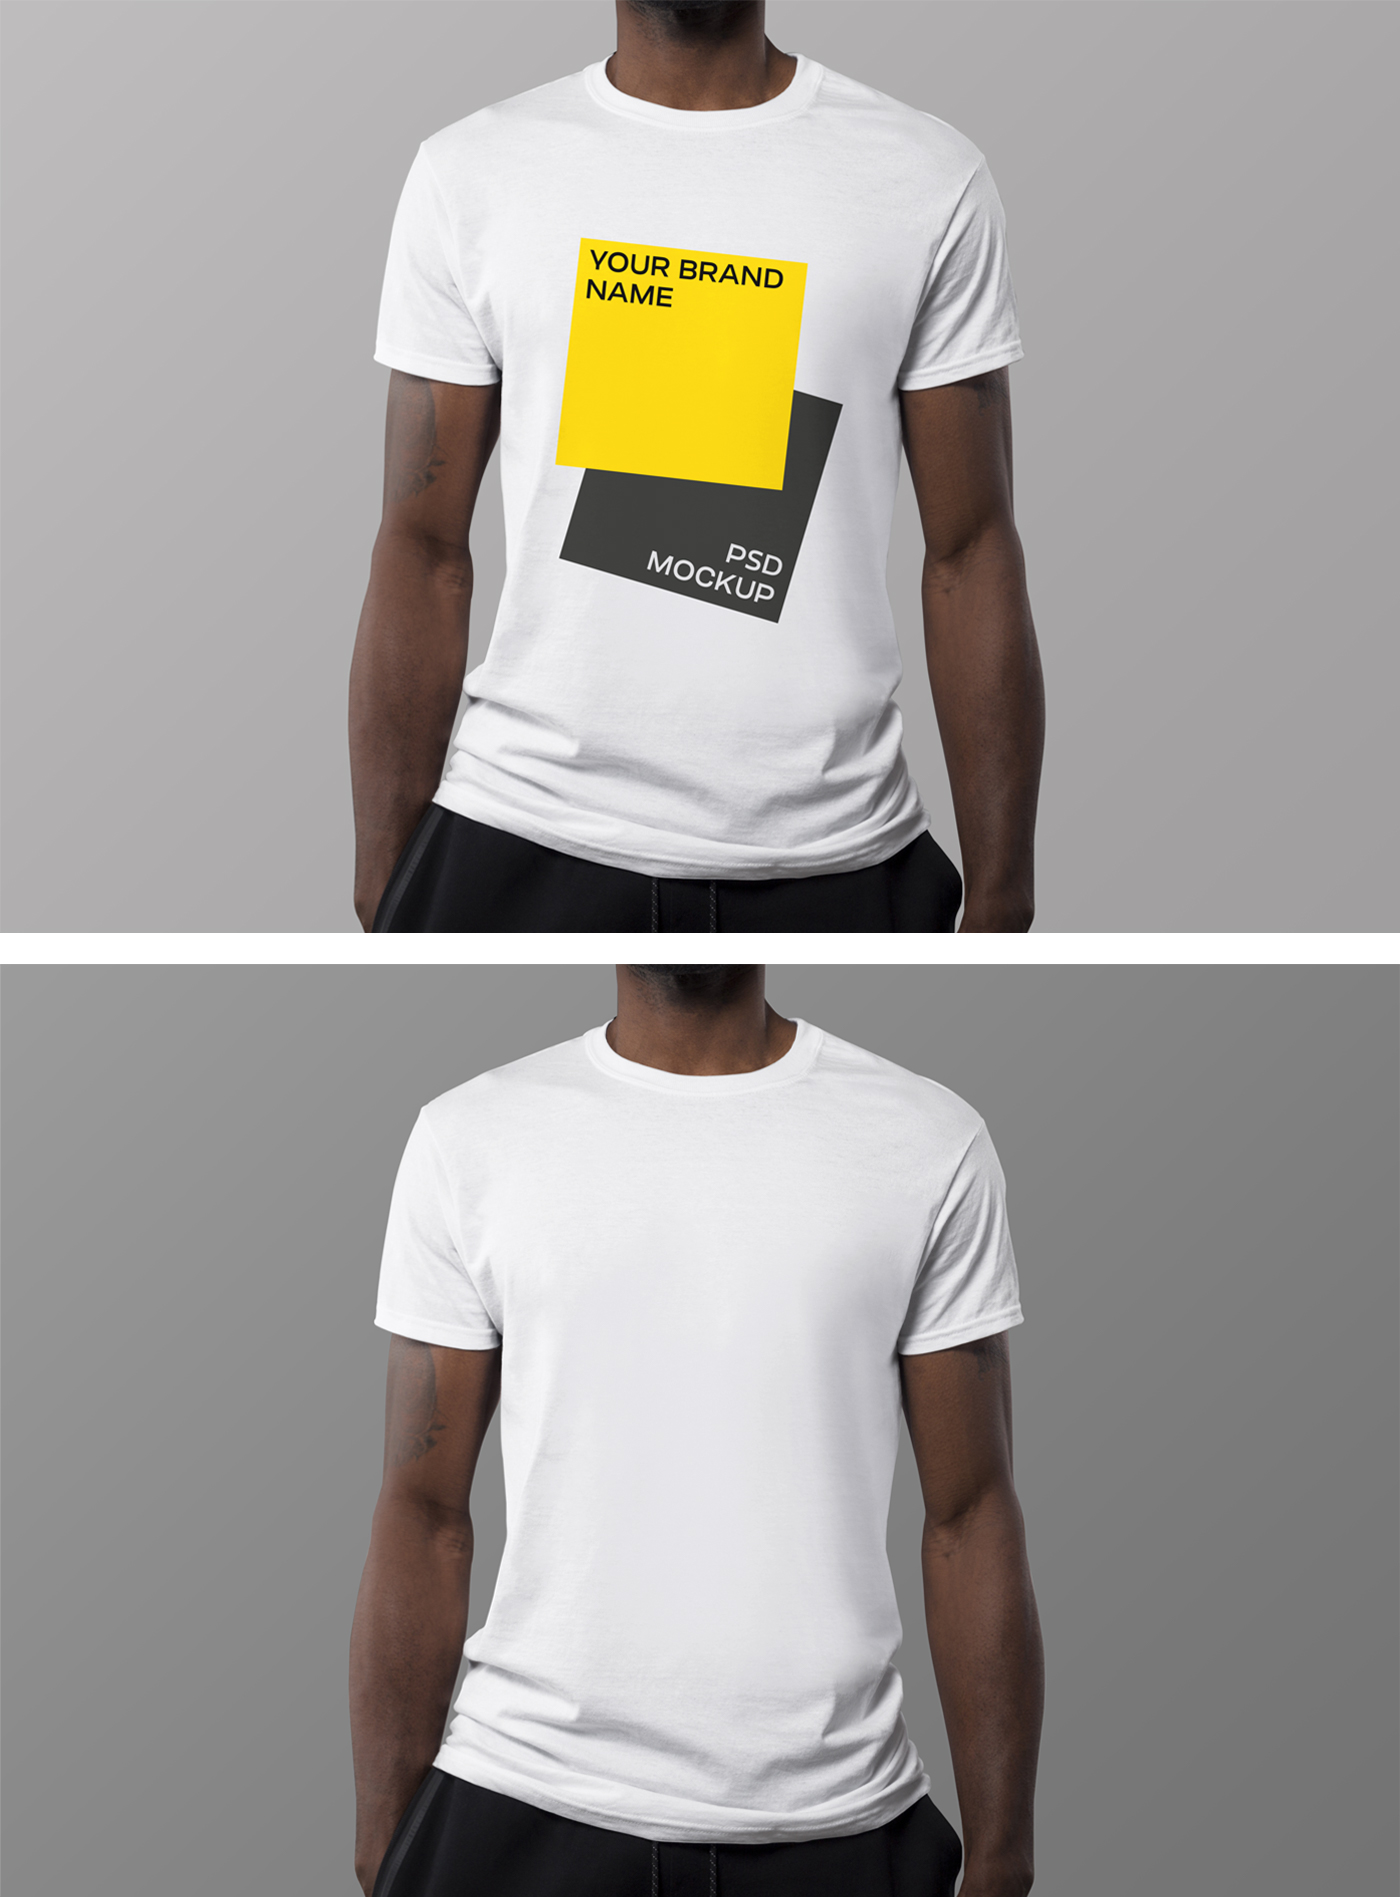 Free Photo-Realistic T-Shirt Mockup | Free Mockups, Best ...